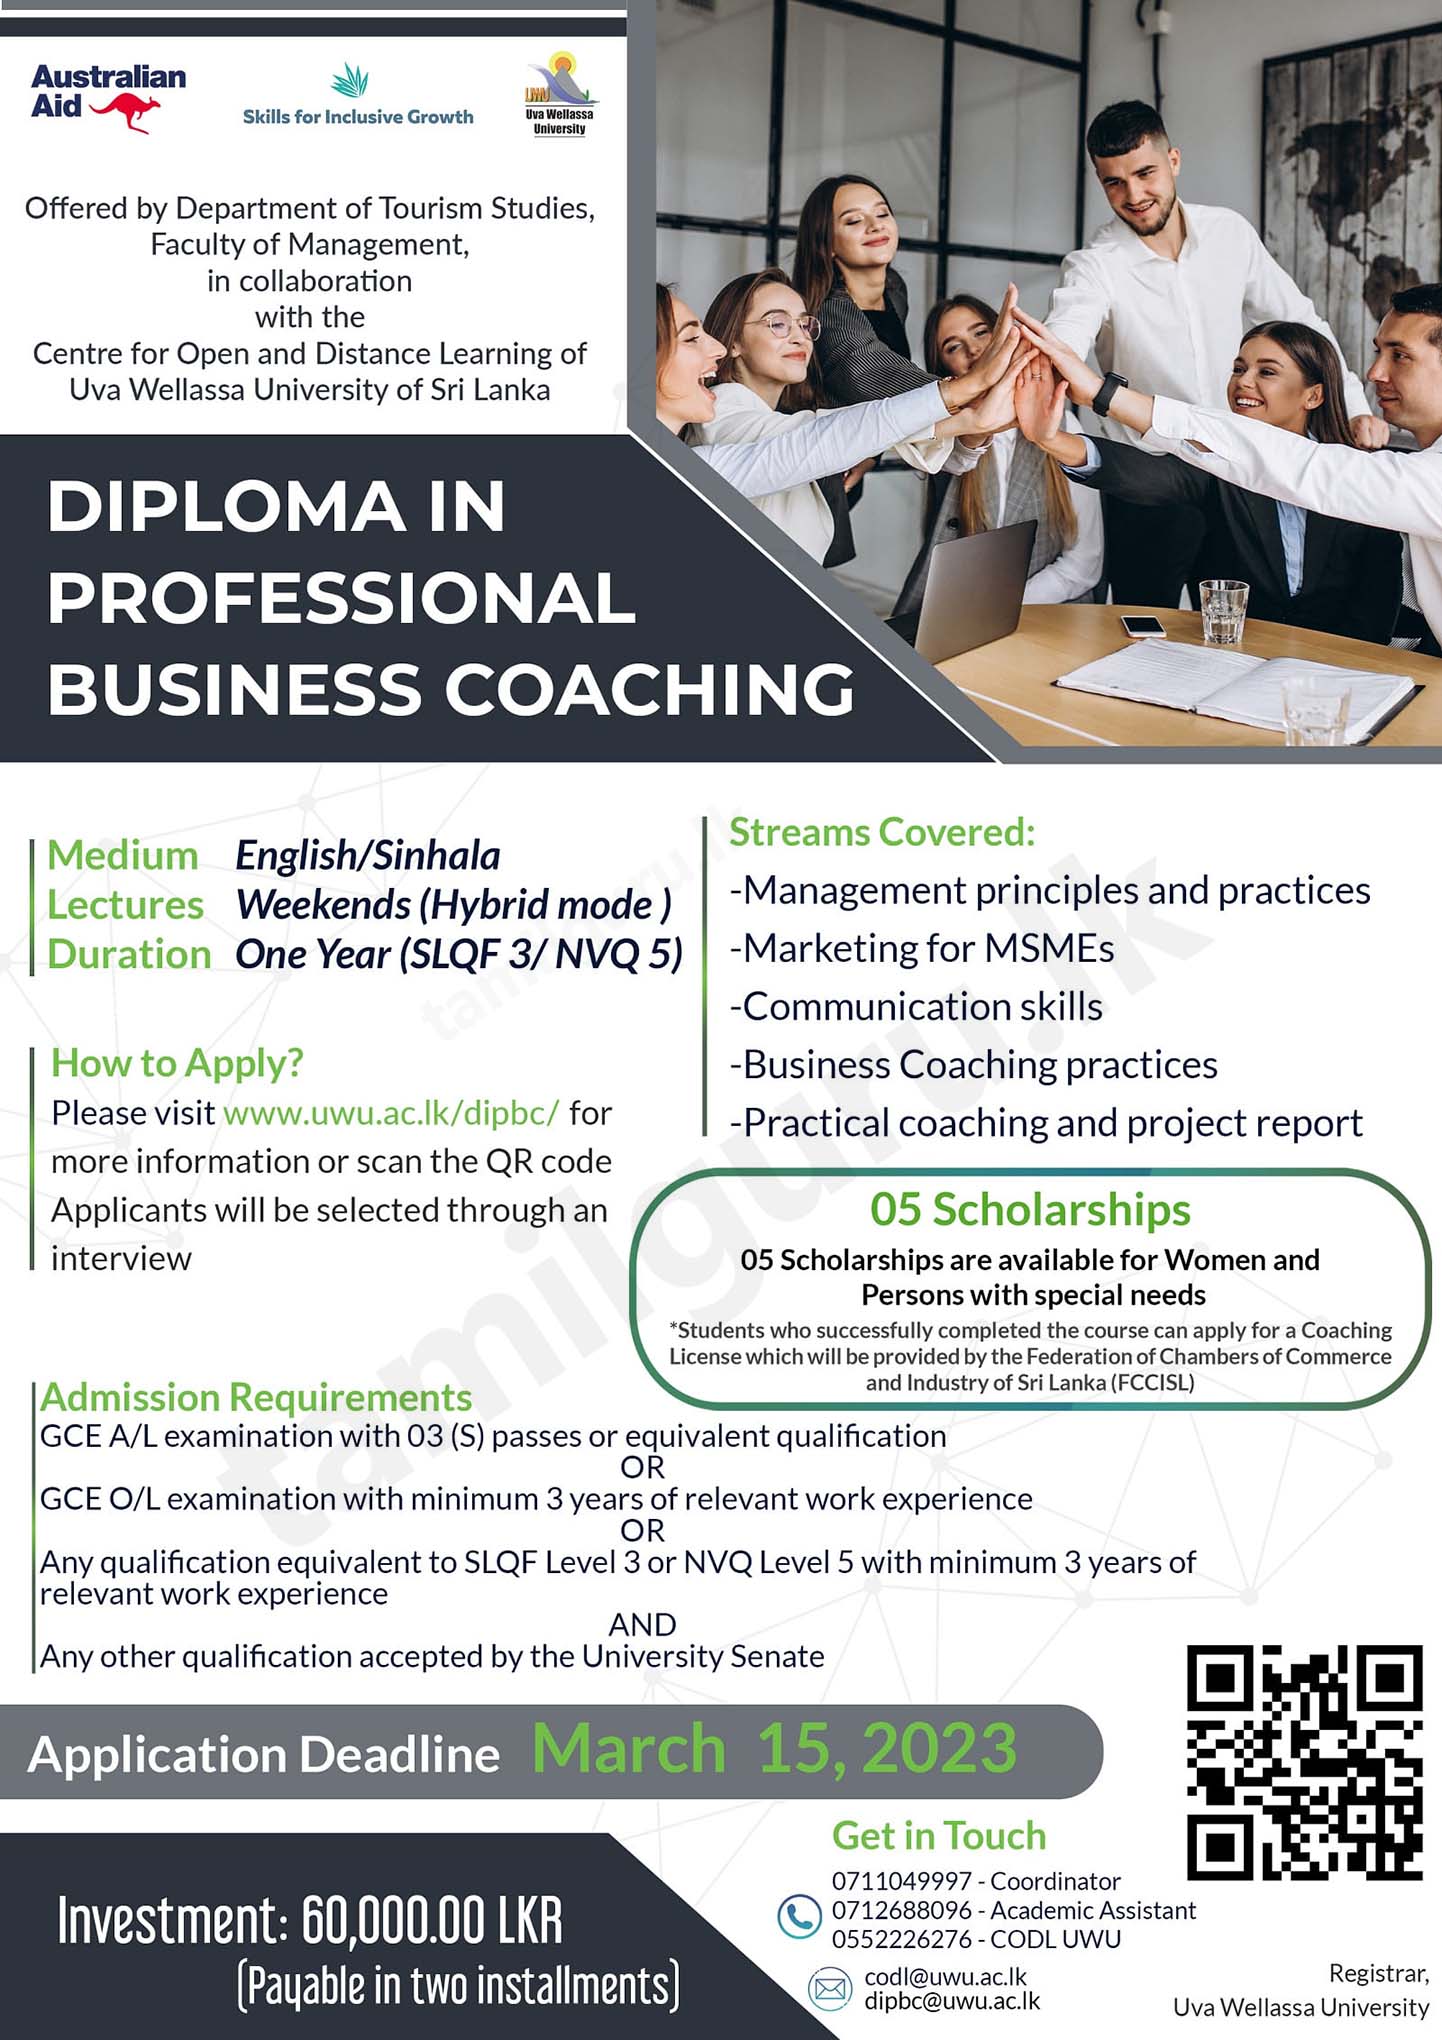 Diploma in Professional Business Coaching 2023 - Uva Wellassa University